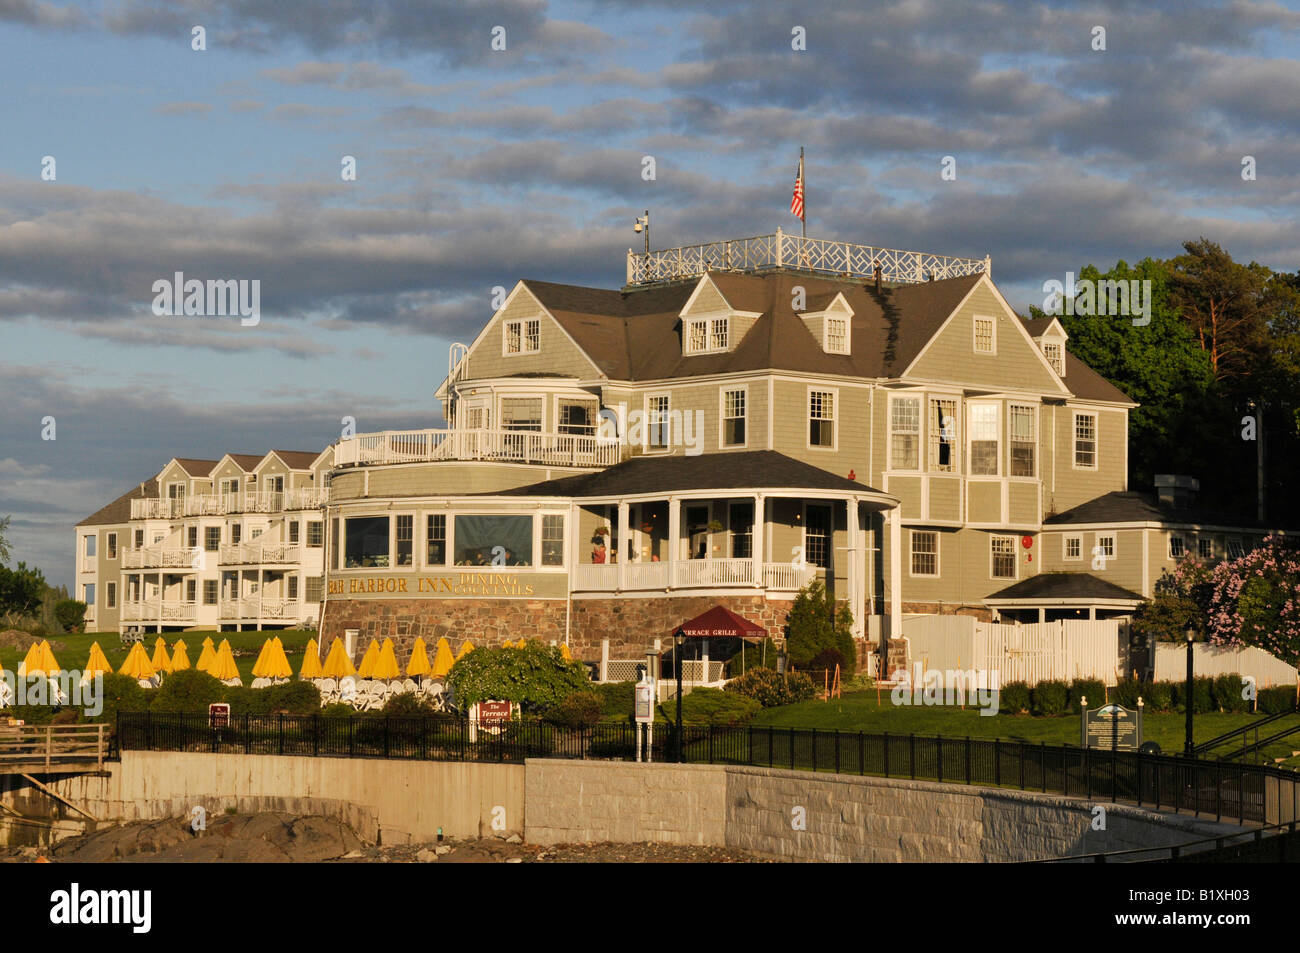 The Bar Harbor Inn in Bar Harbor, Maine, United States Stock Photo